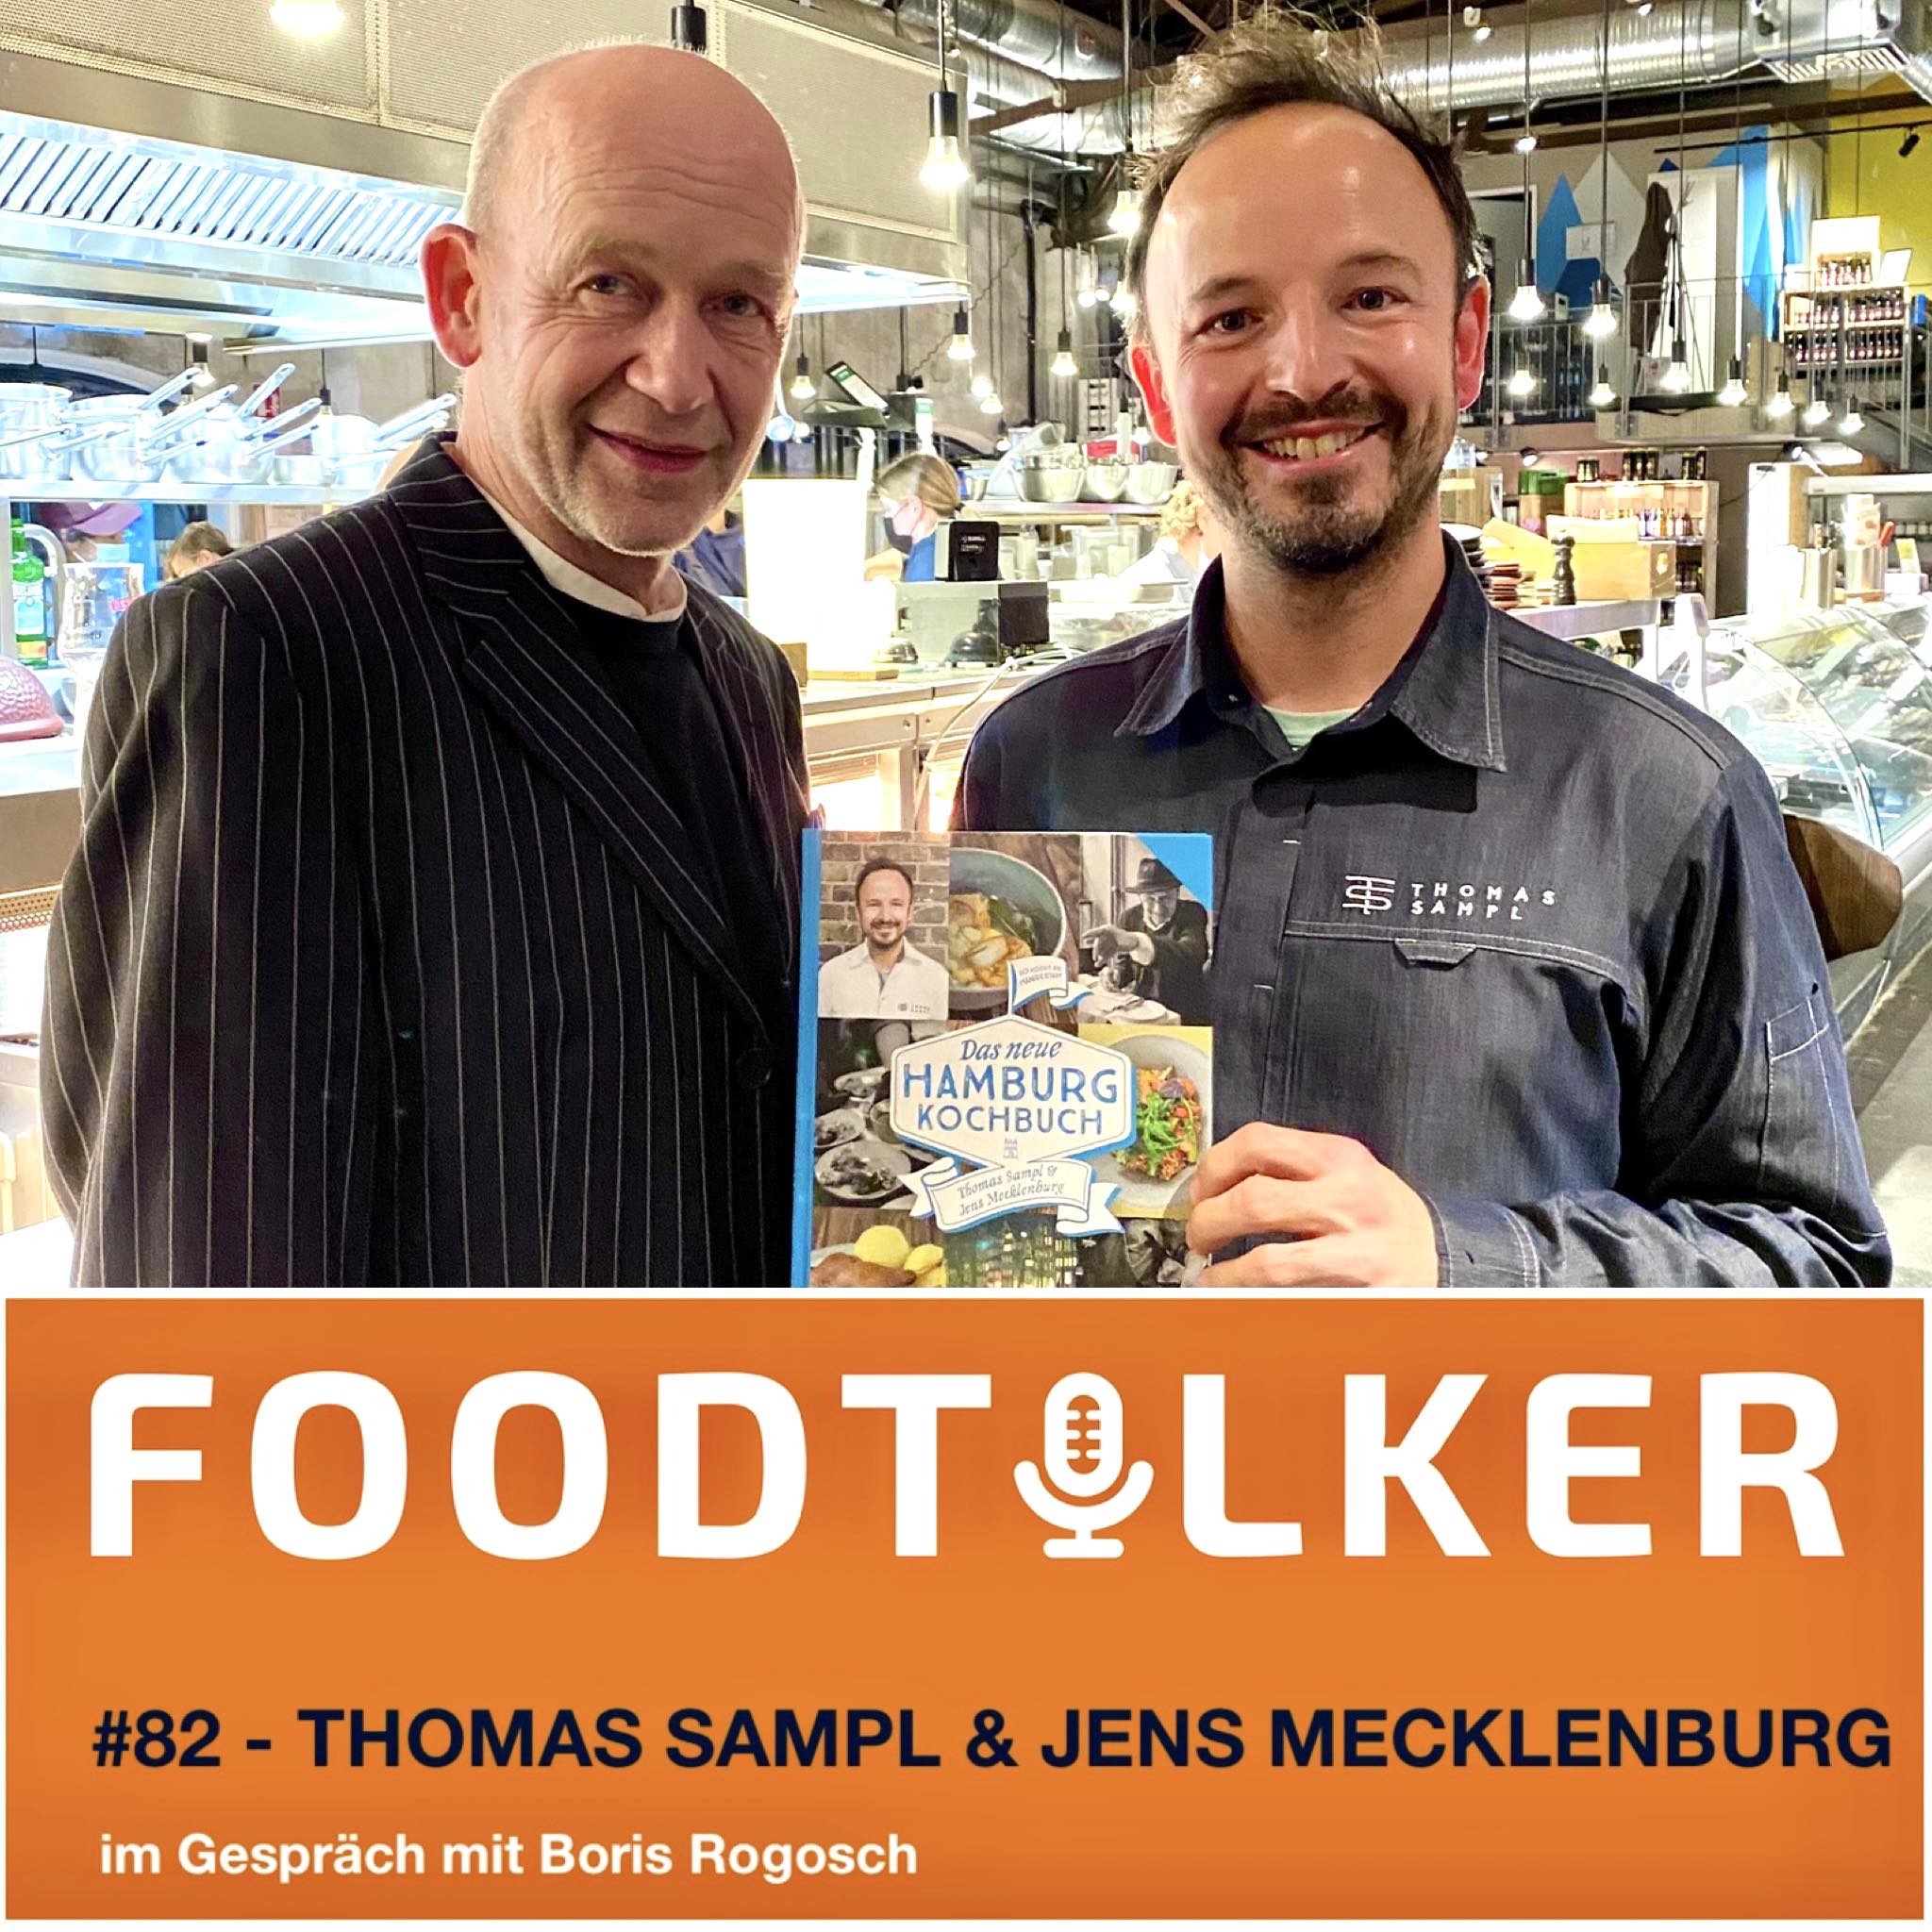 Jens Mecklenburg & Thomas Sampl